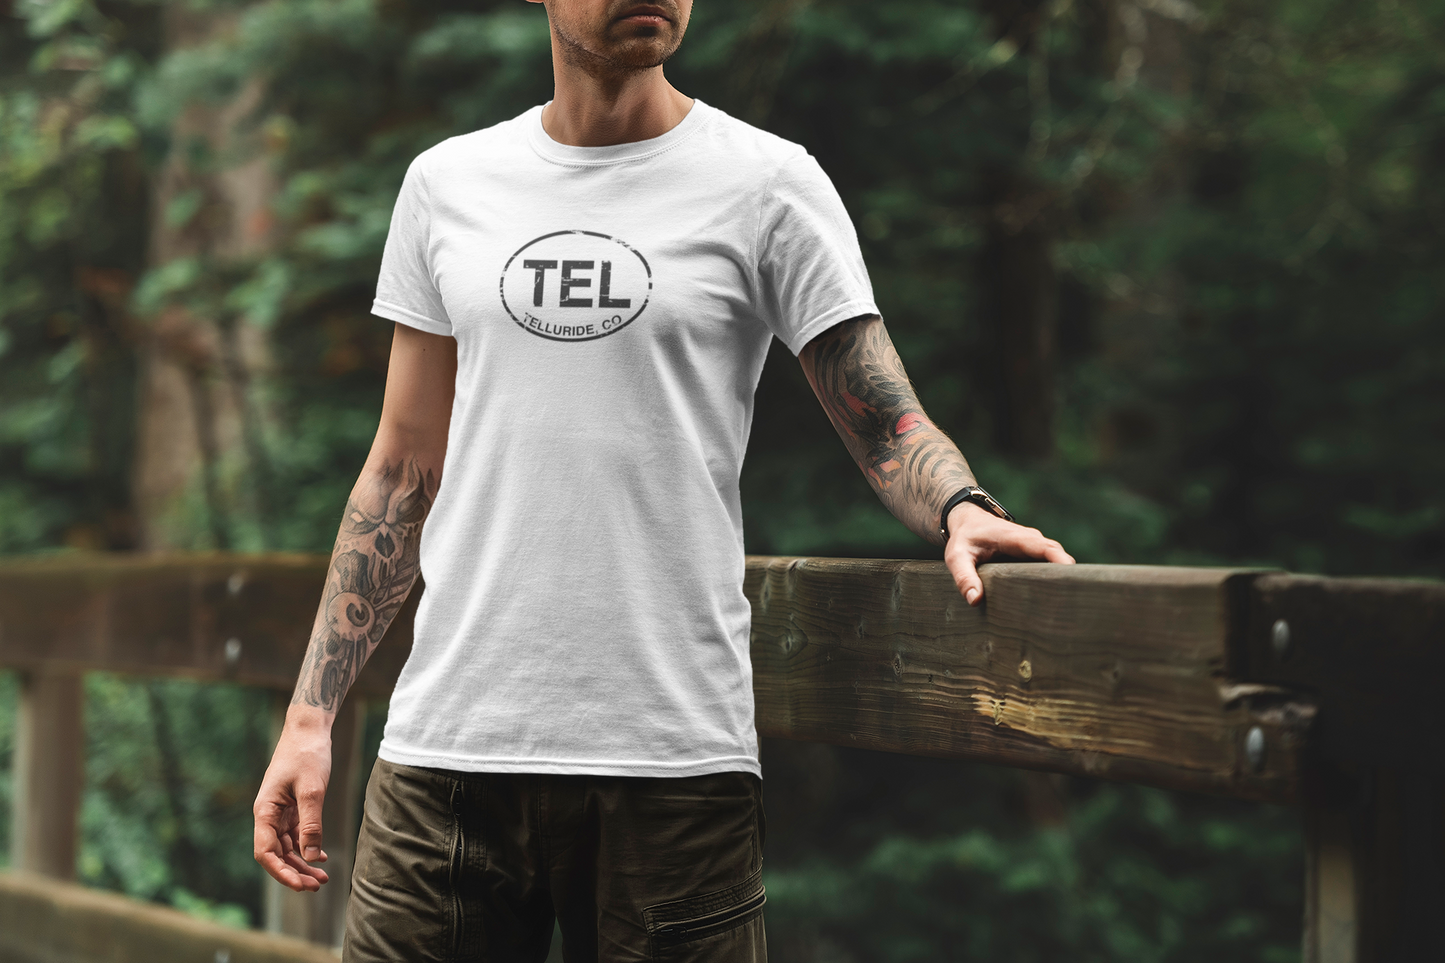 Telluride, CO Men's Classic T-Shirt Souvenir Gift - My Destination Location